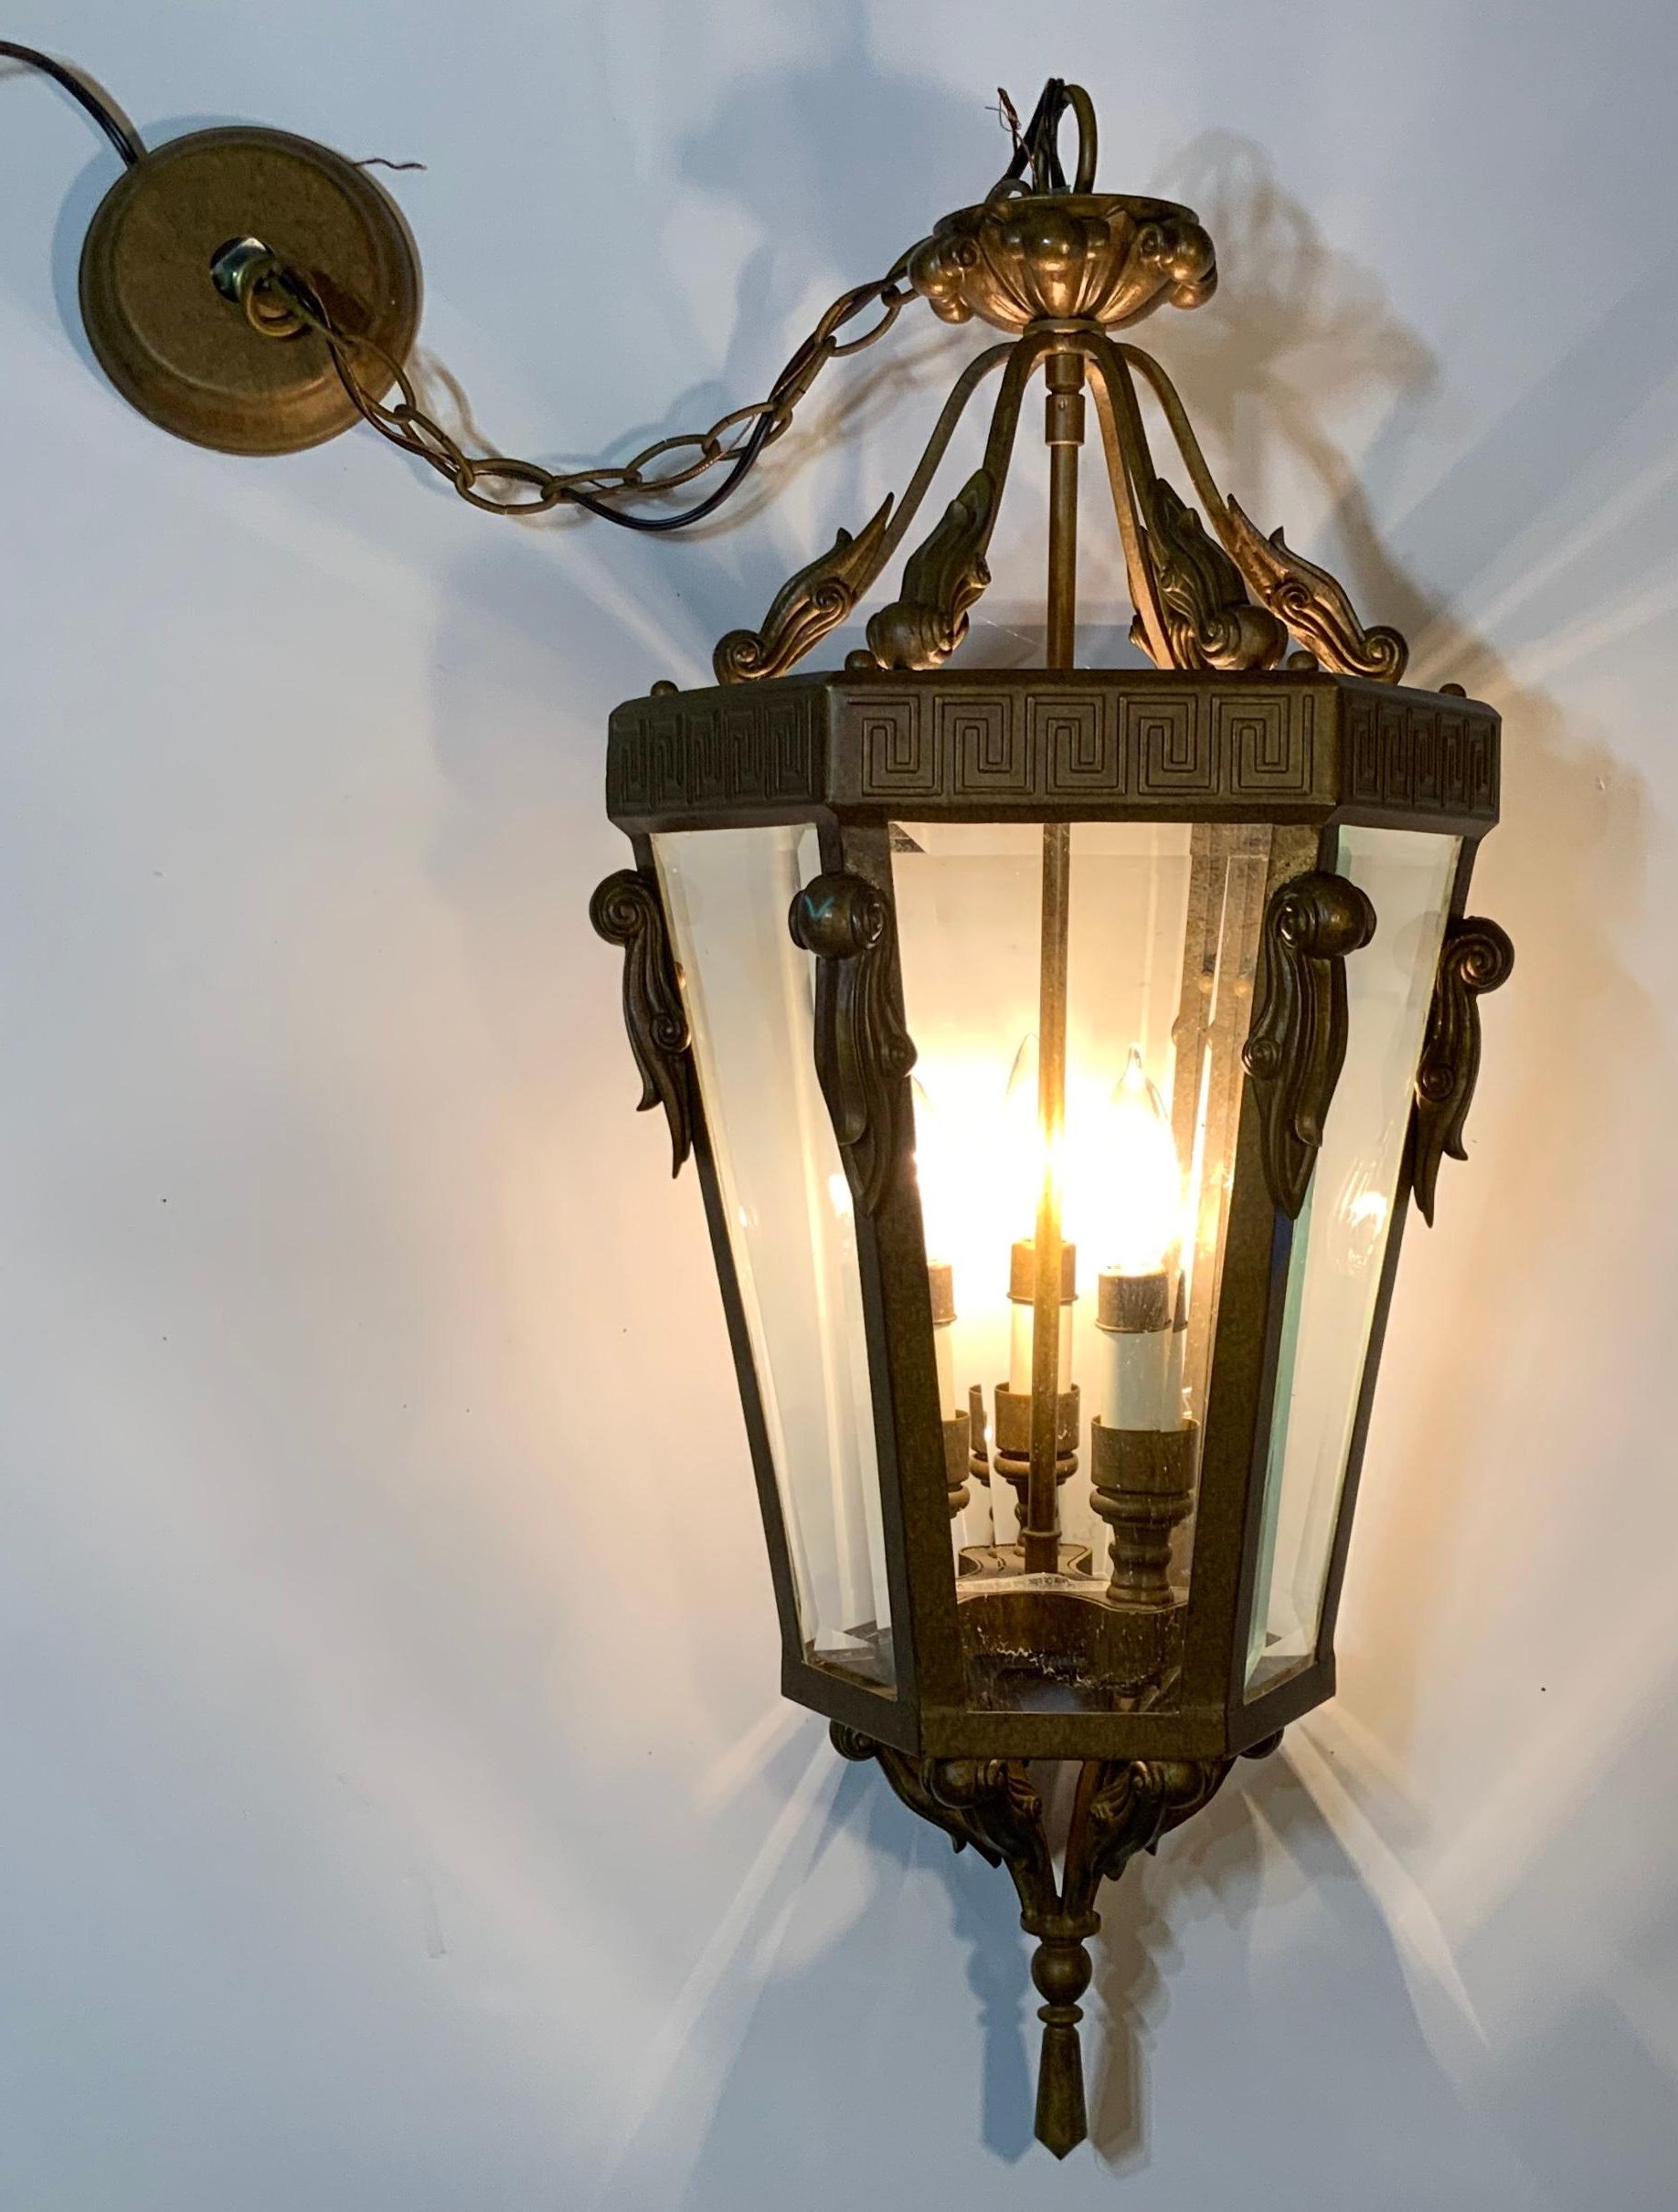 Vintage Six Sides Indoor Elegant Hanging Lantern Chandelier For Sale At  1stdibs Within Most Recently Released Vintage Copper Lantern Chandeliers (View 13 of 15)